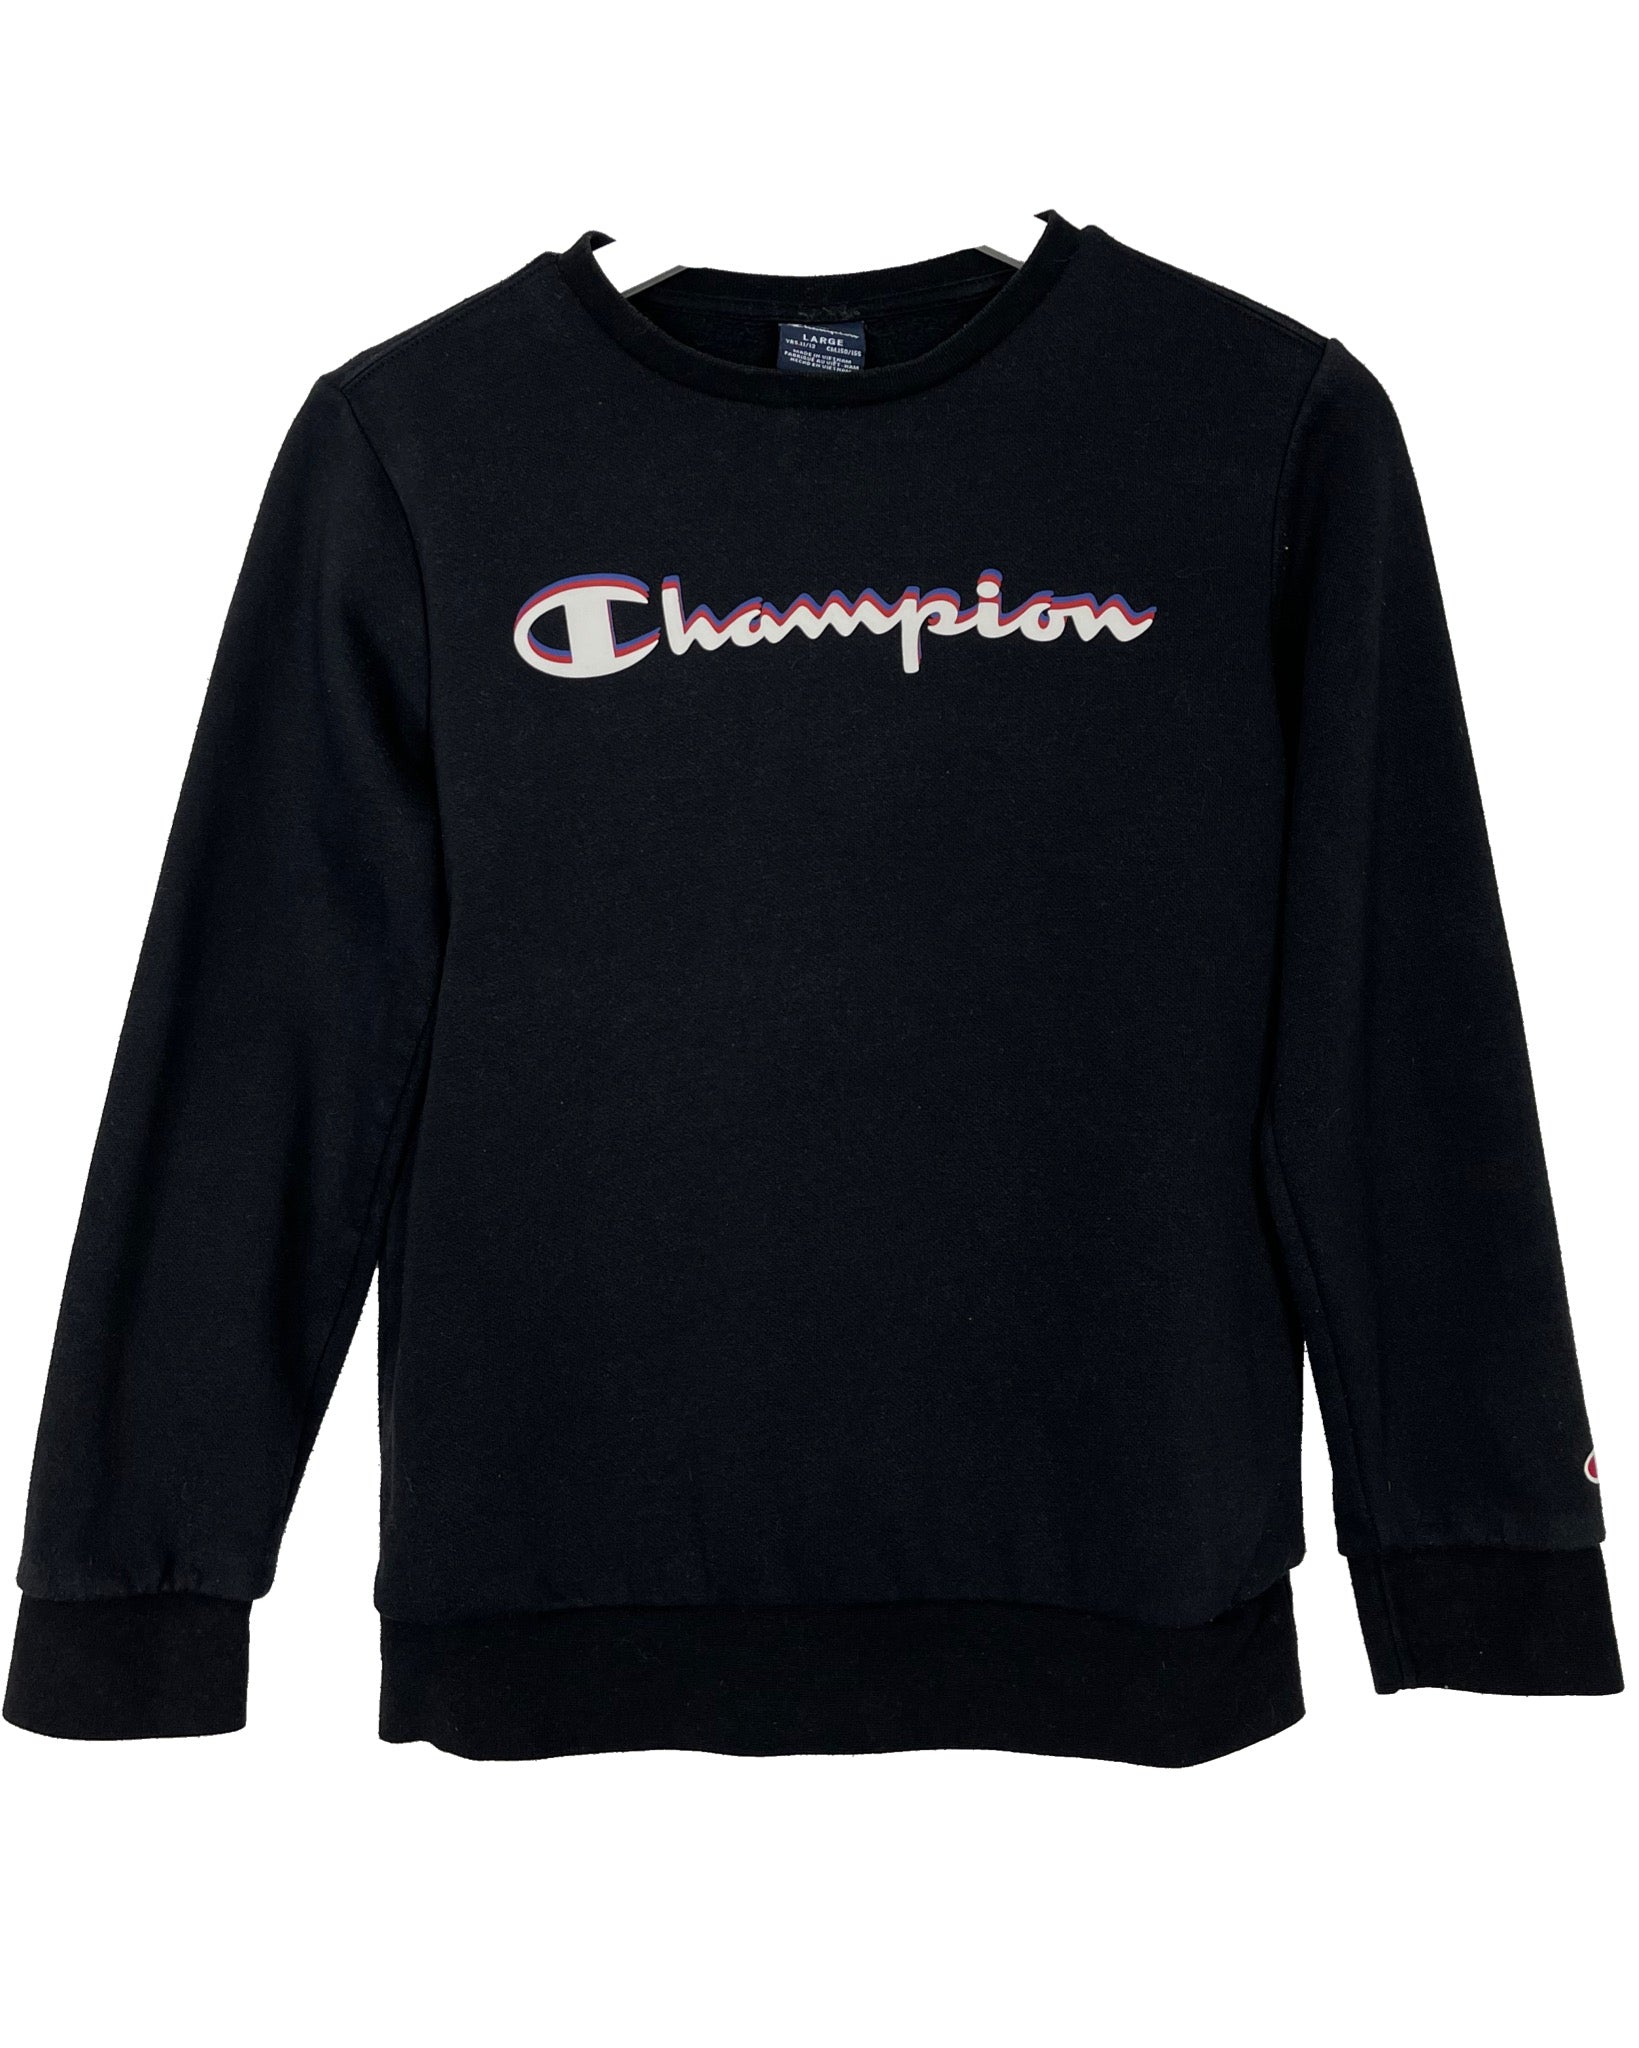  Sweatshirt Champion Sweat - 11/12A - PLOMOSTORE